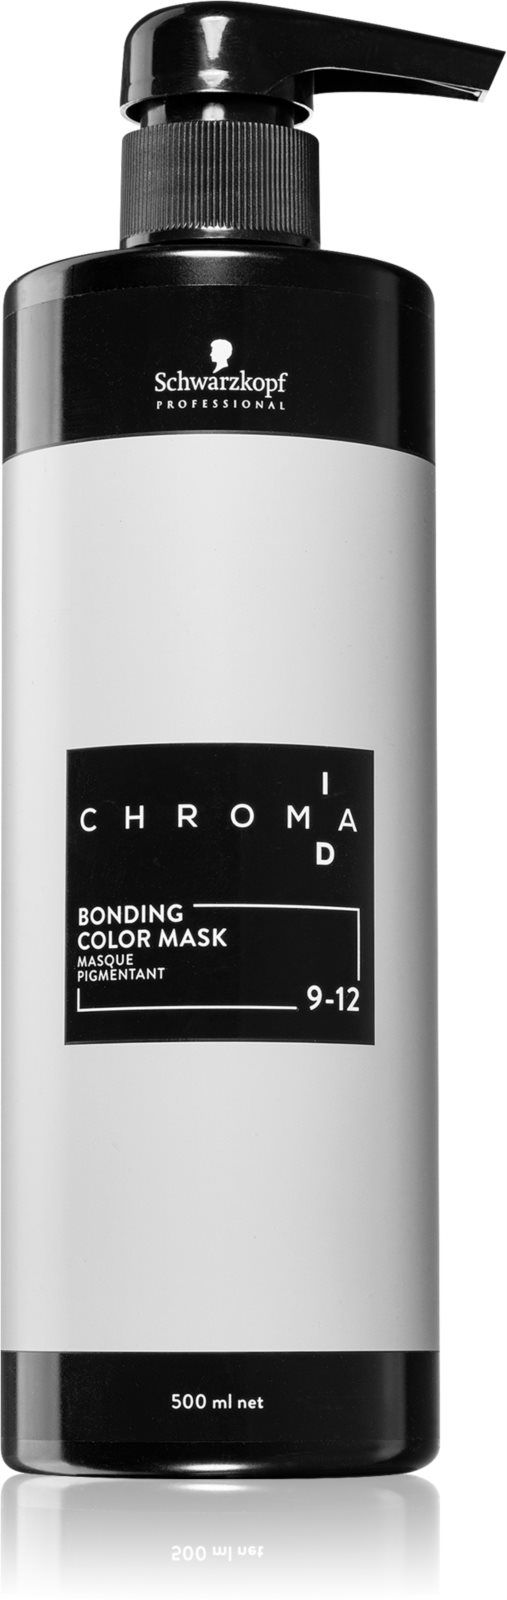 Bonding color mask schwarzkopf. Chroma ID Schwarzkopf 9-12. Chroma ID 9-12 250ml.